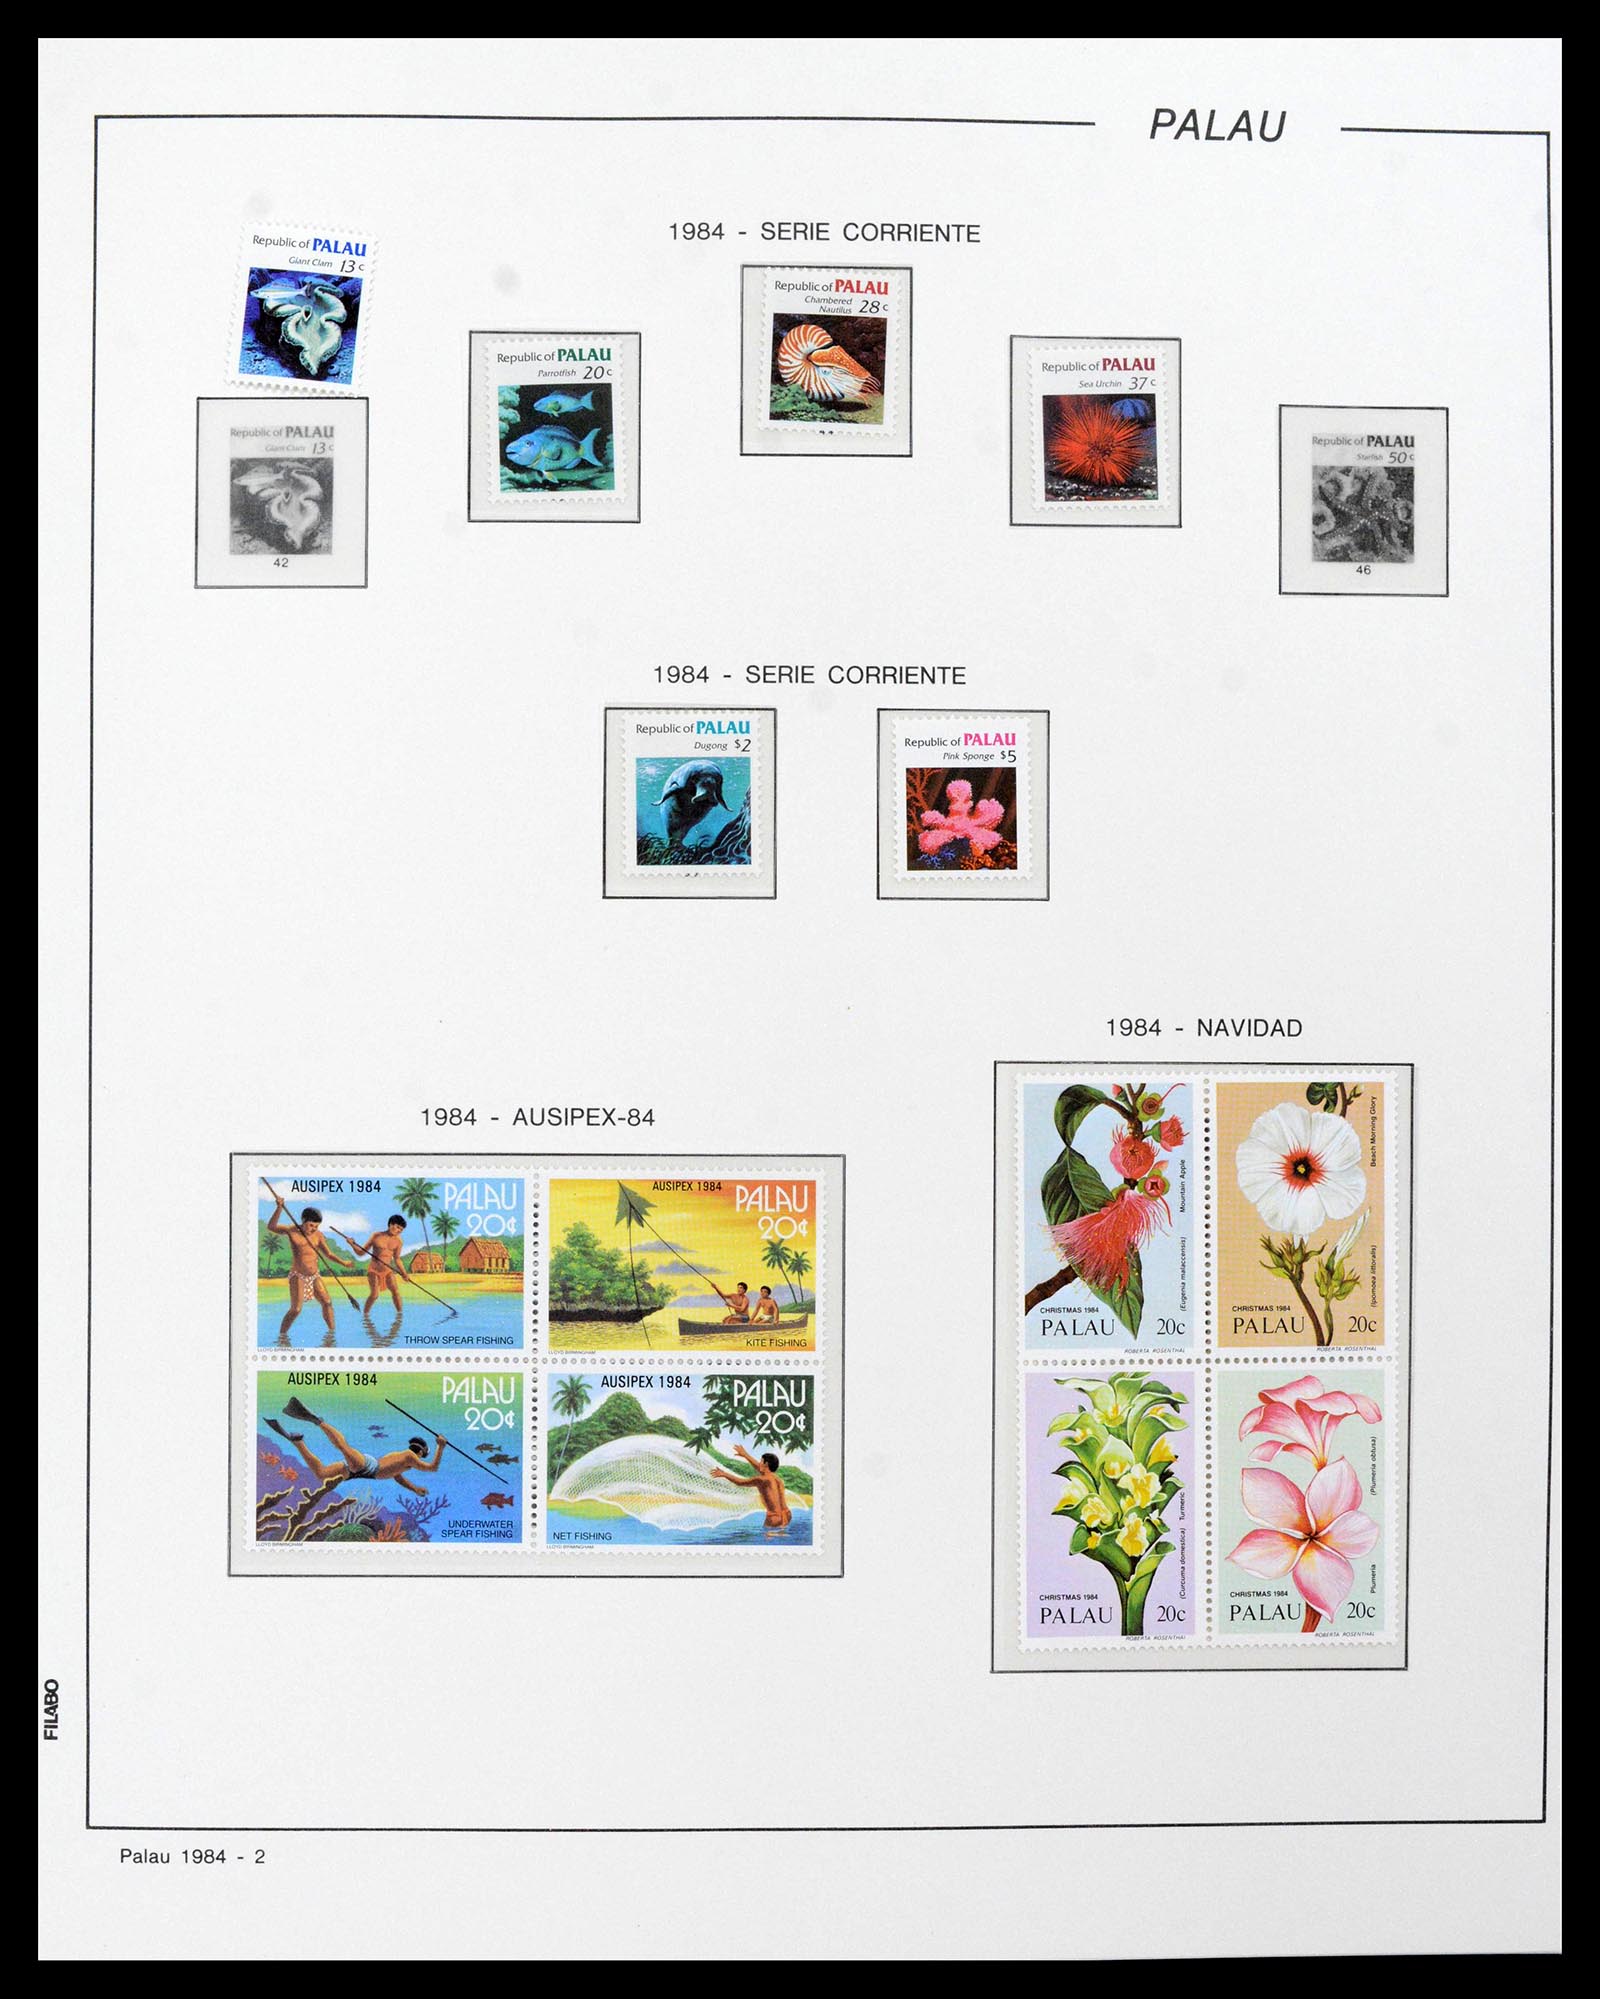 39222 0004 - Stamp collection 39222 Palau, Micronesia and Marshall islands 1980-1995.